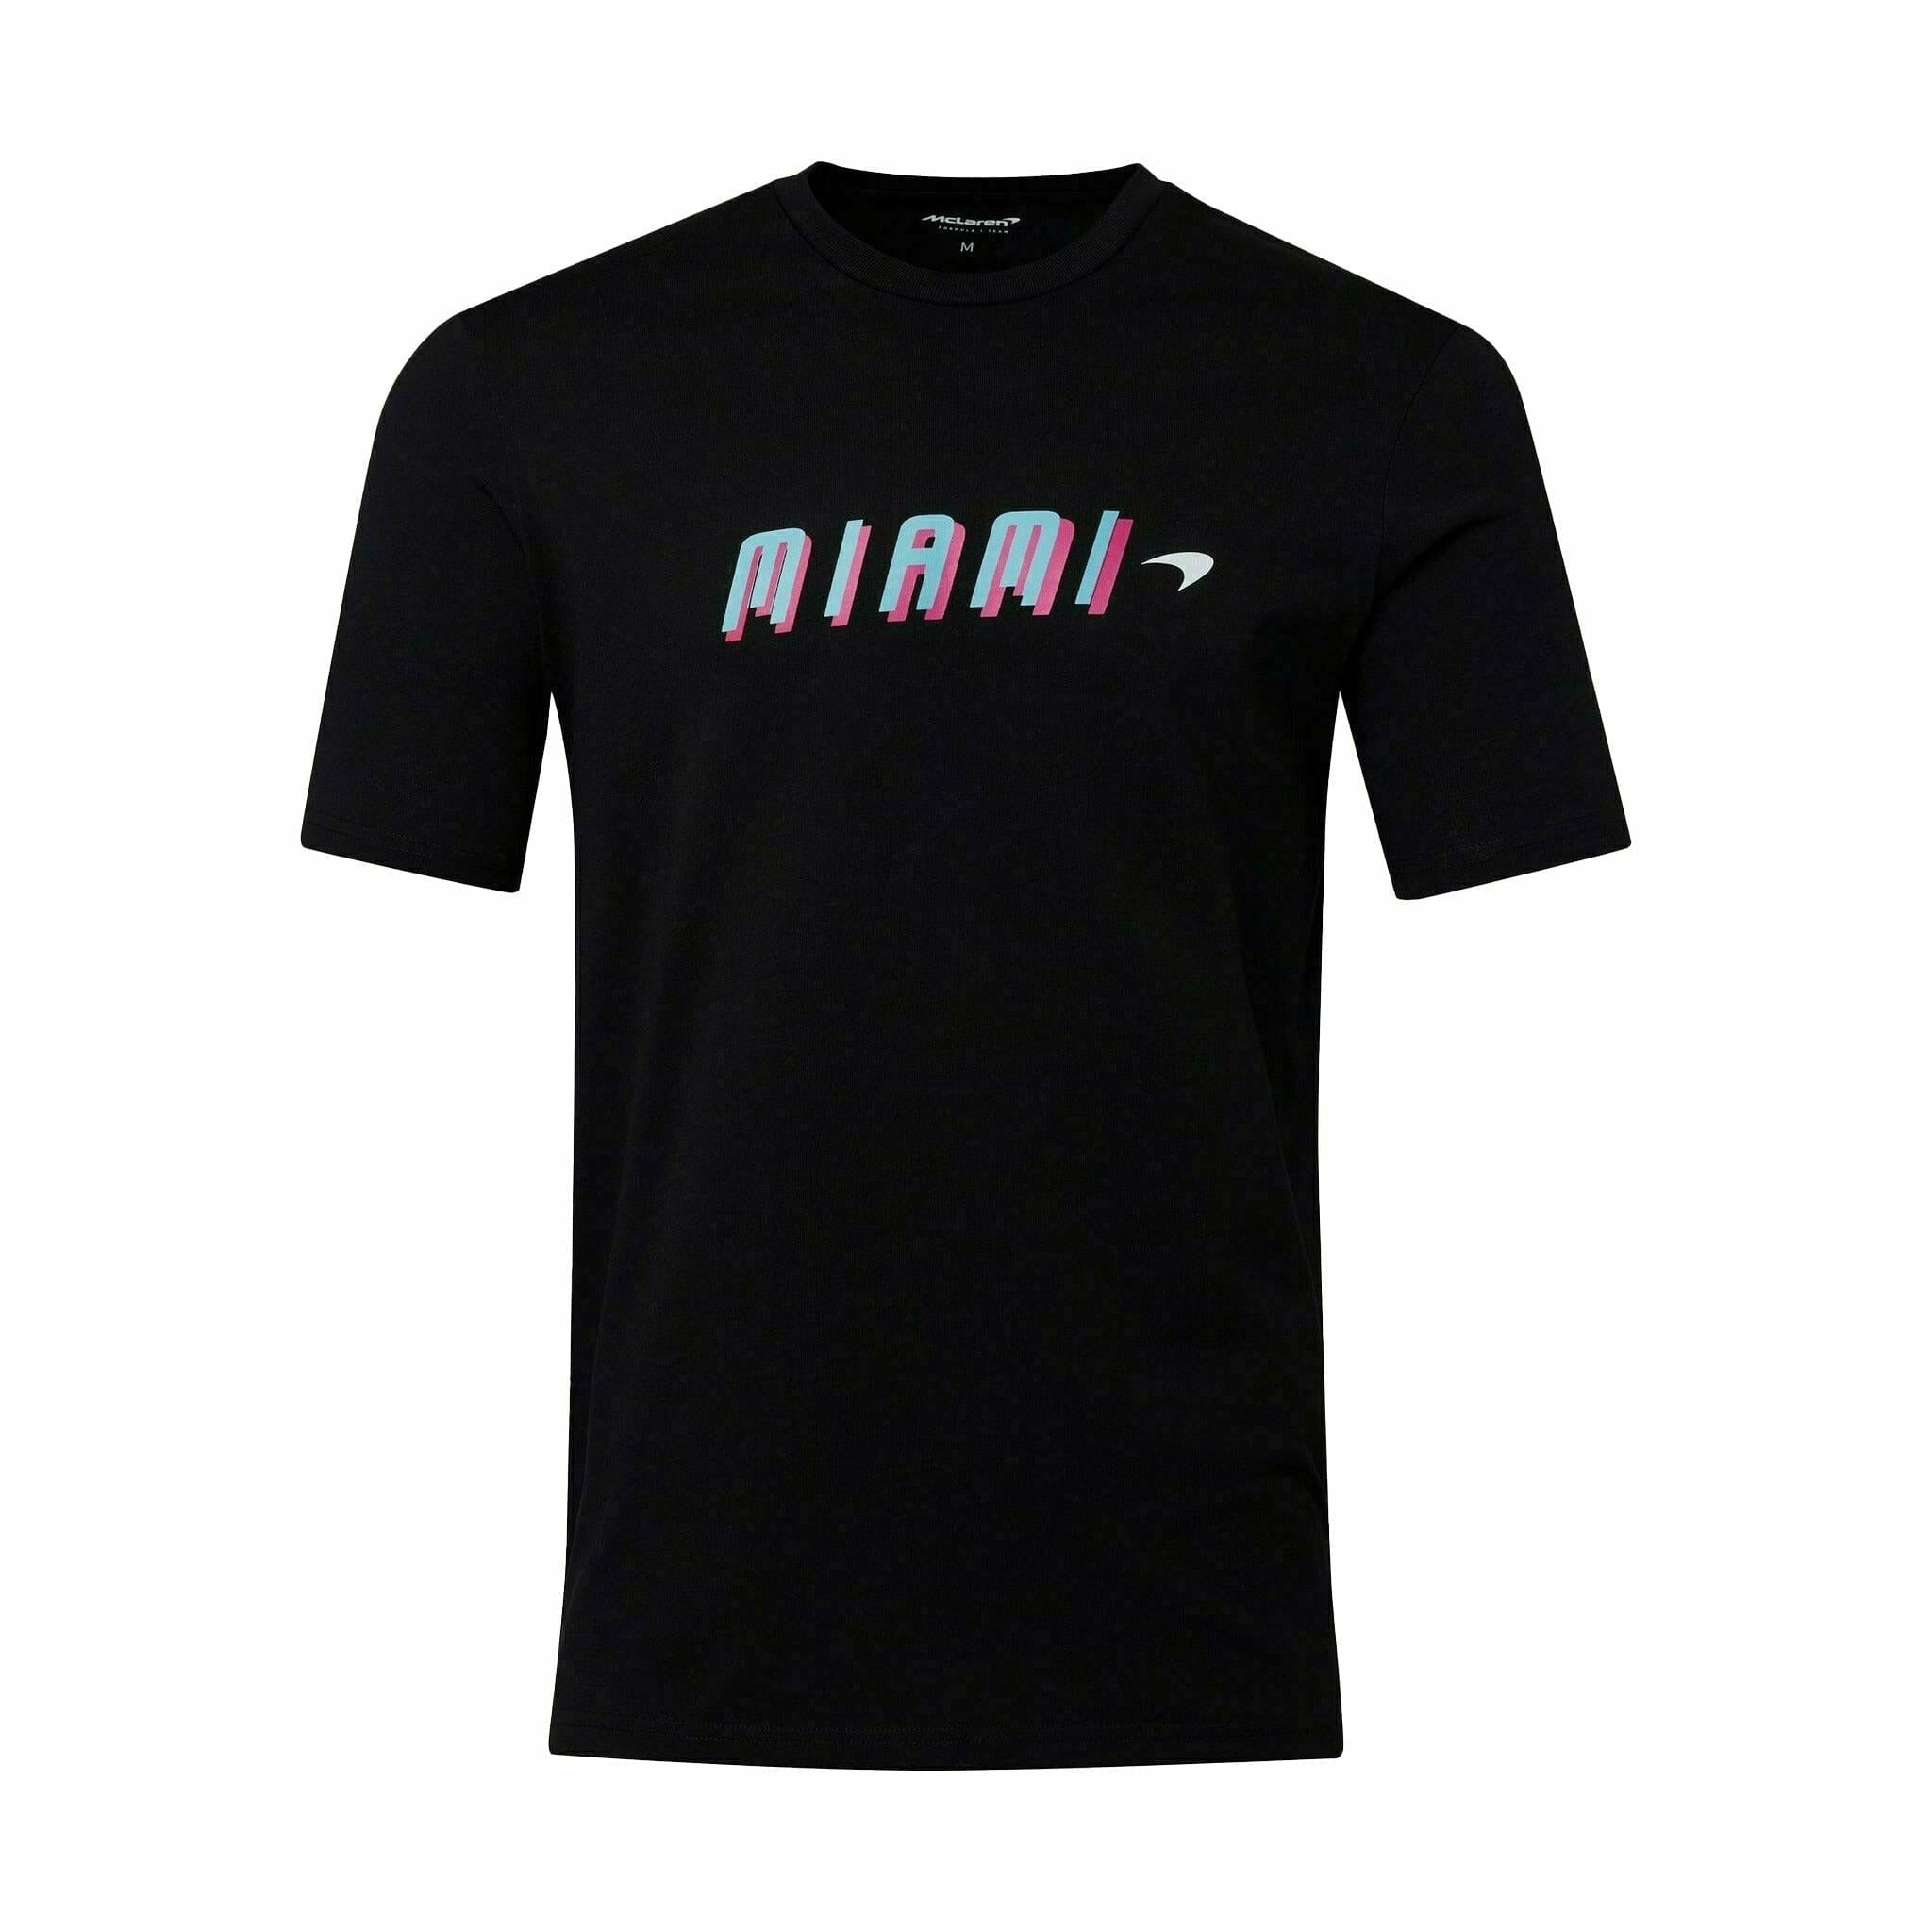 McLaren F1 Men's Miami Neon Graphic T-Shirt-Black/White/Vice Blue